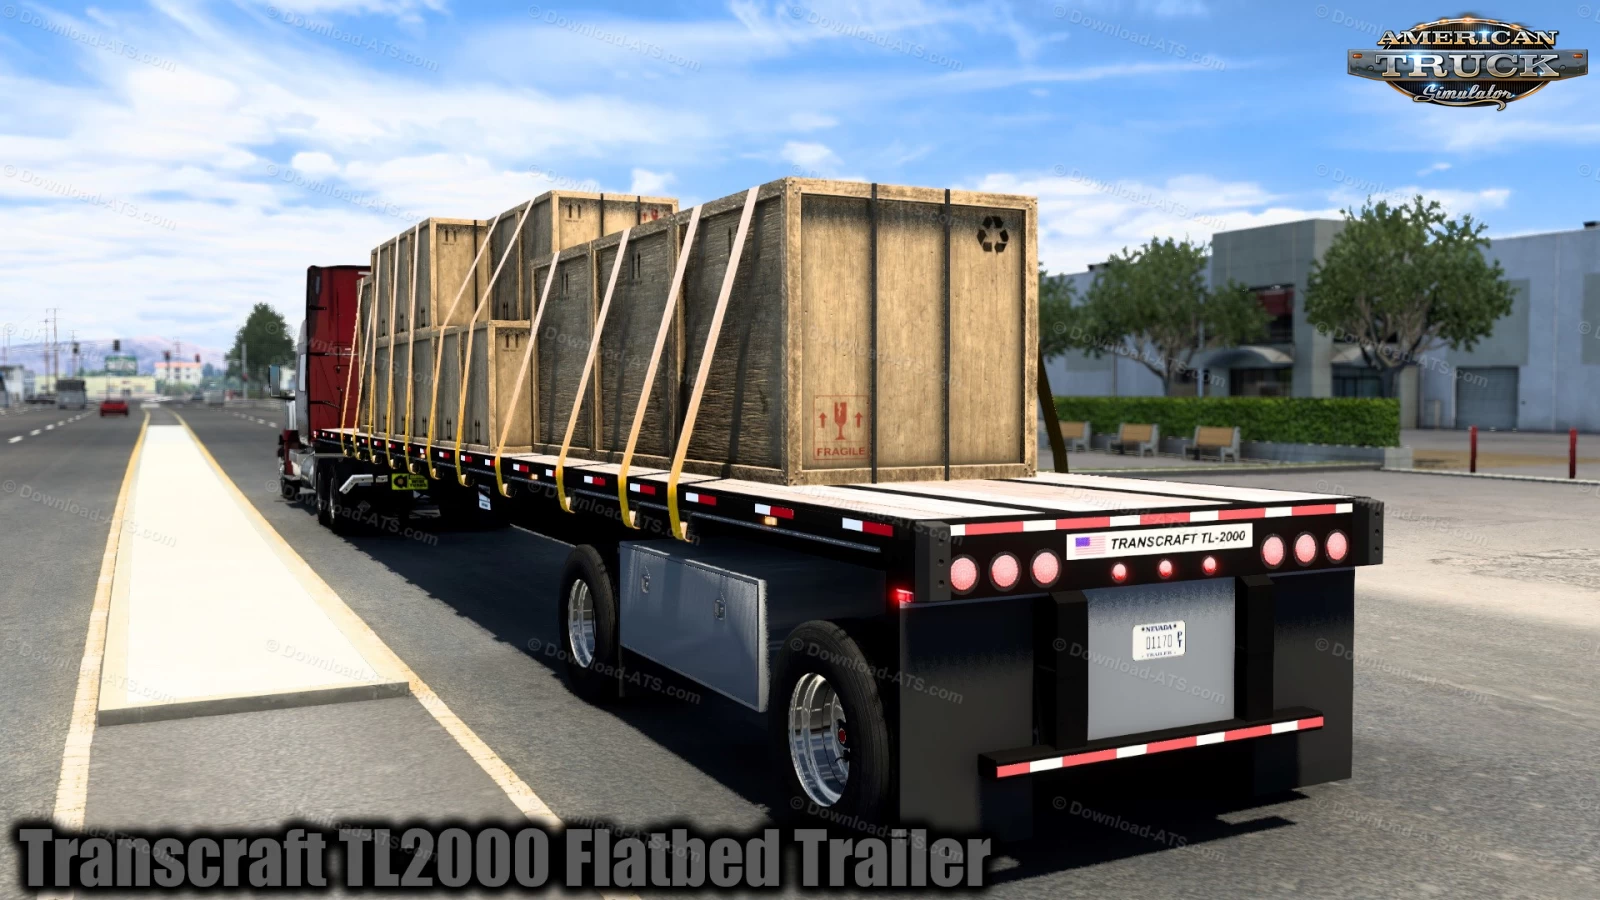 Transcraft TL2000 Flatbed Trailer v1.1 (1.40.x) for ATS